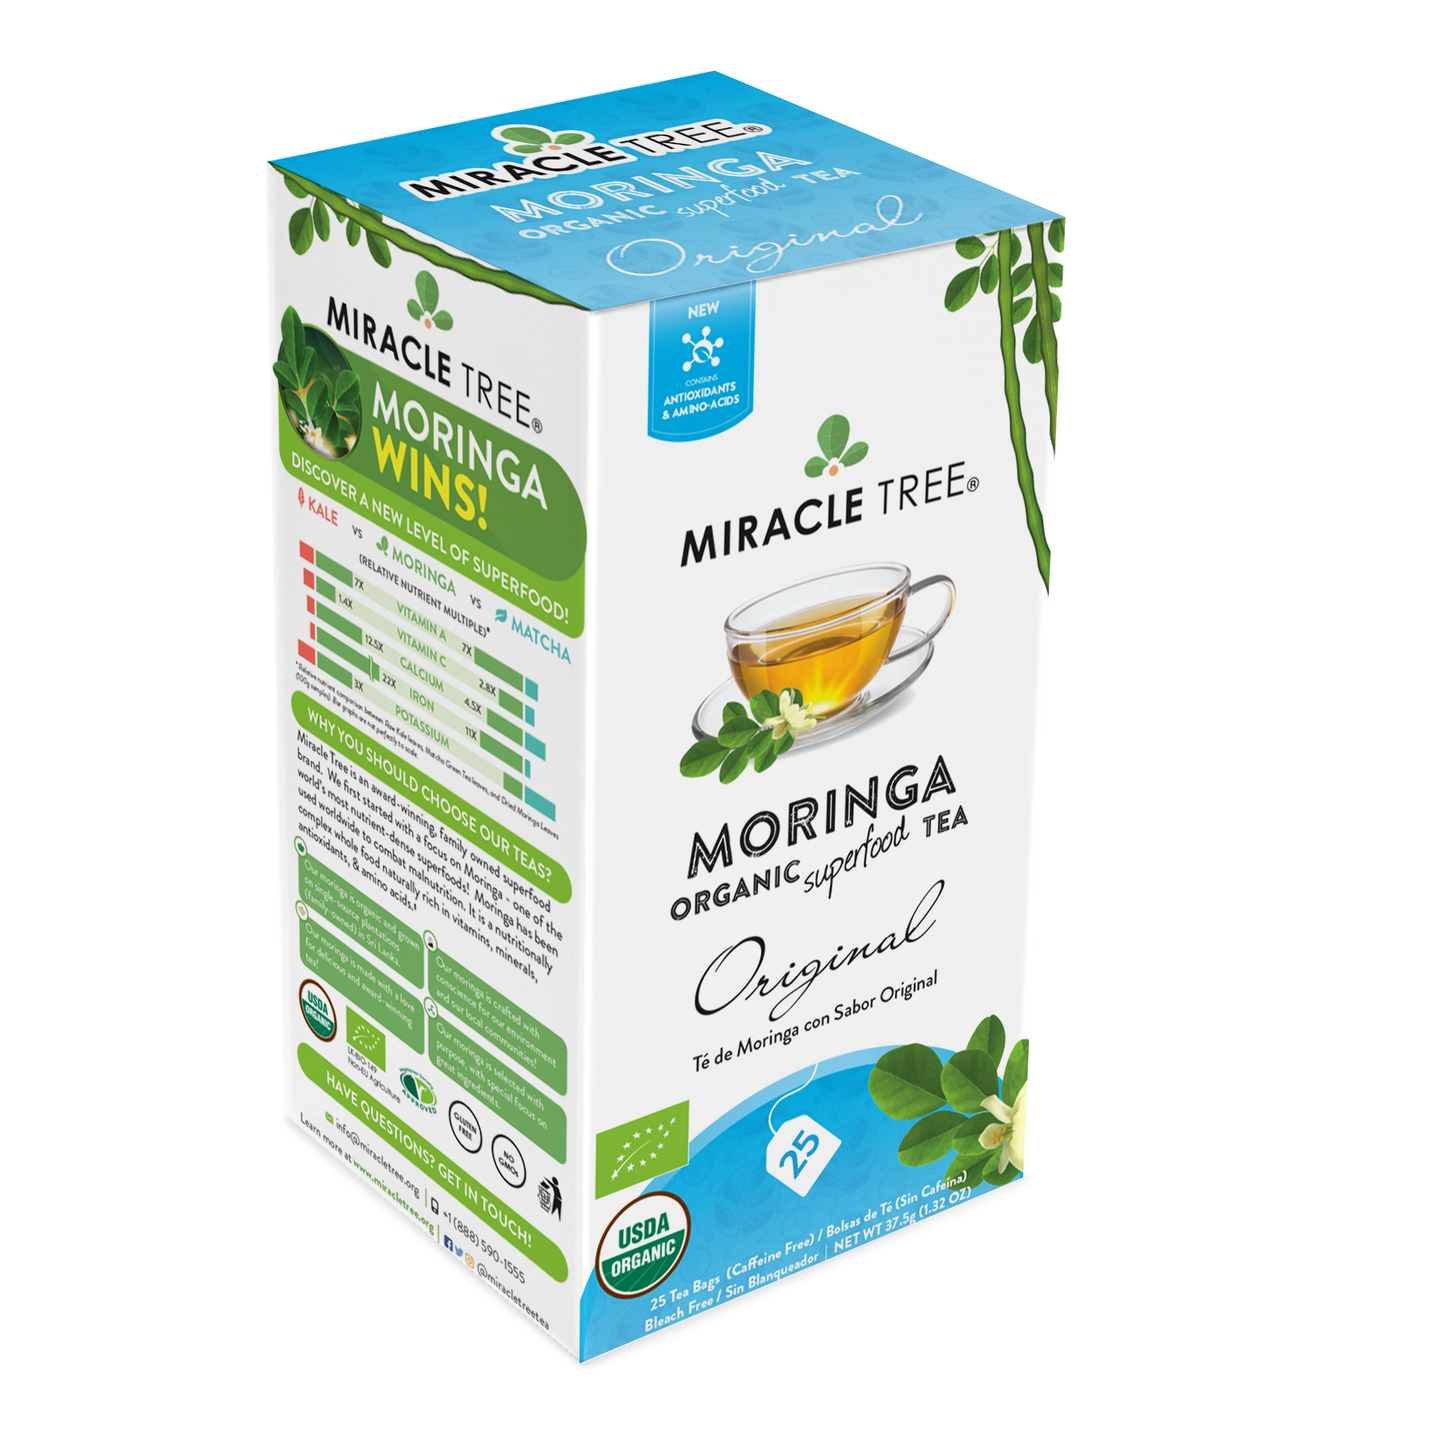 Miracle Tree Organic Moringa Tea Original